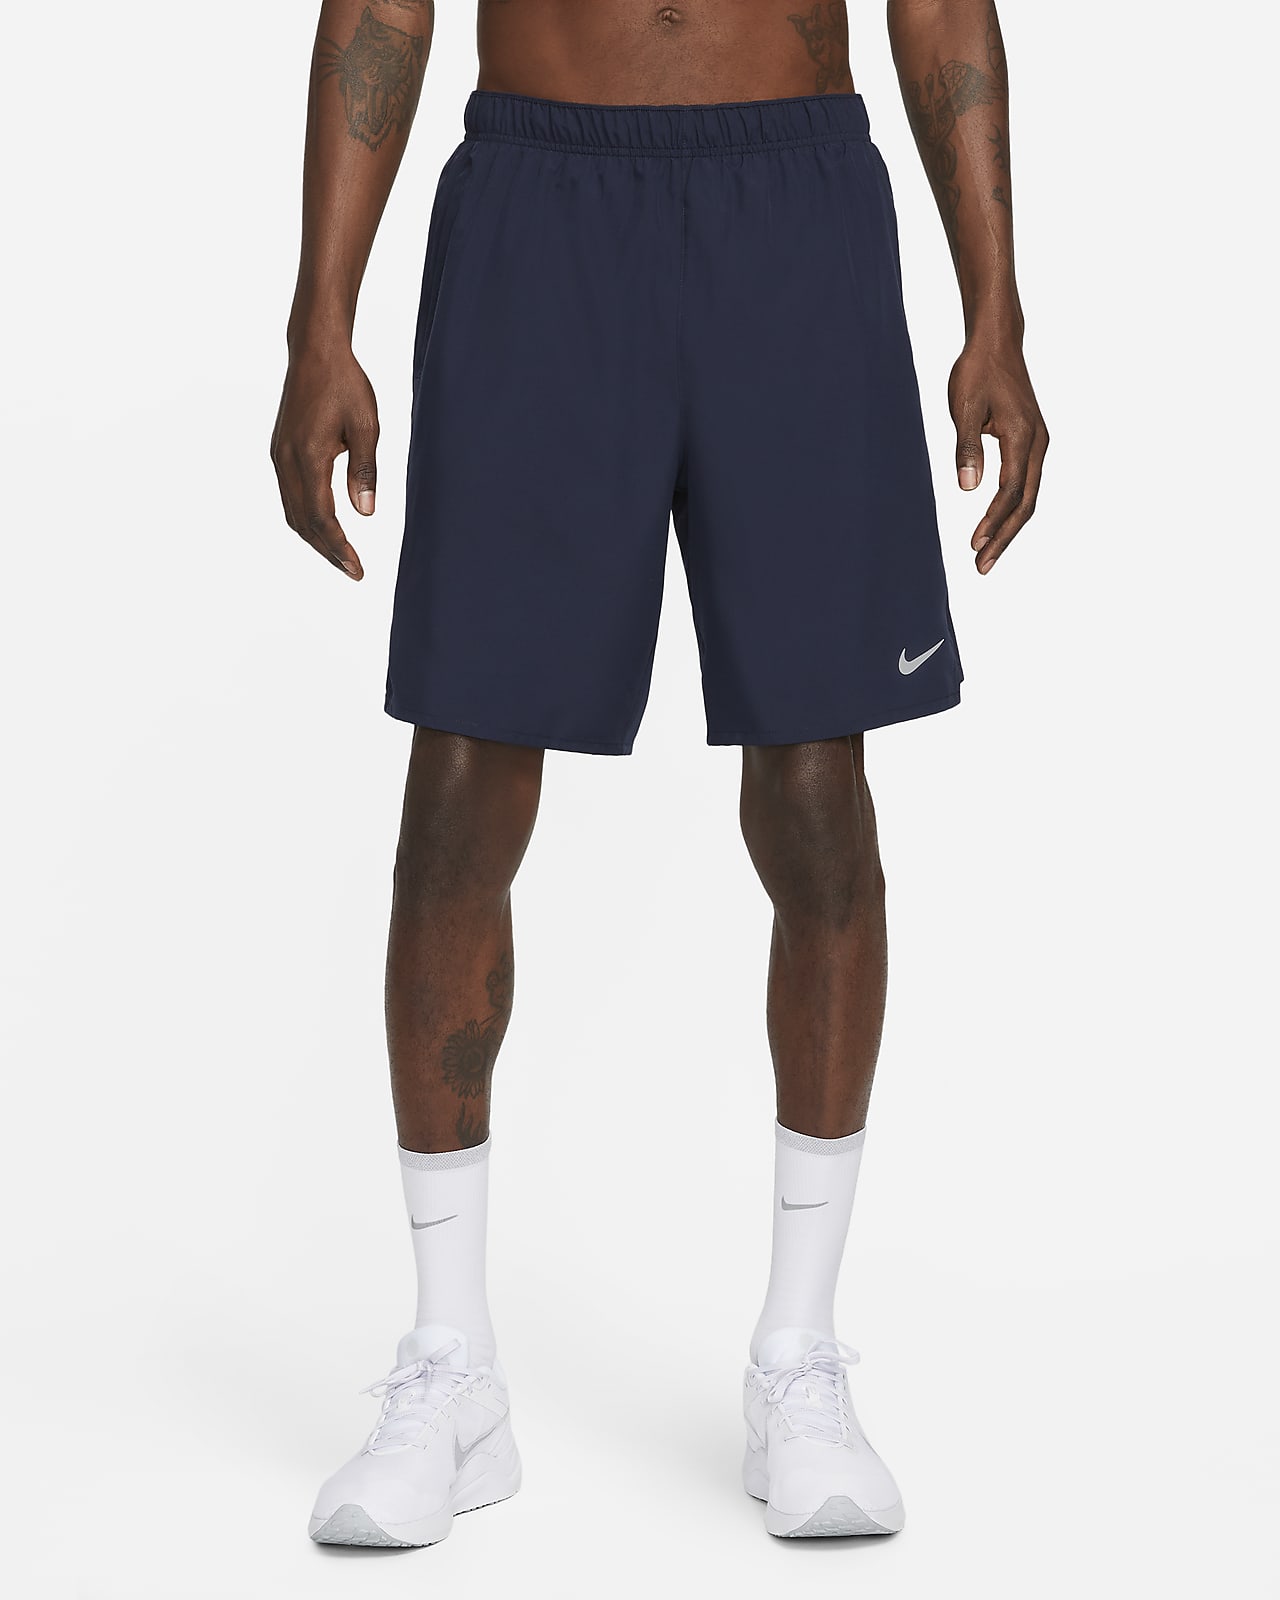 Nike Challenger Pantalón corto Dri-FIT versátil de 23 cm sin forro - Hombre